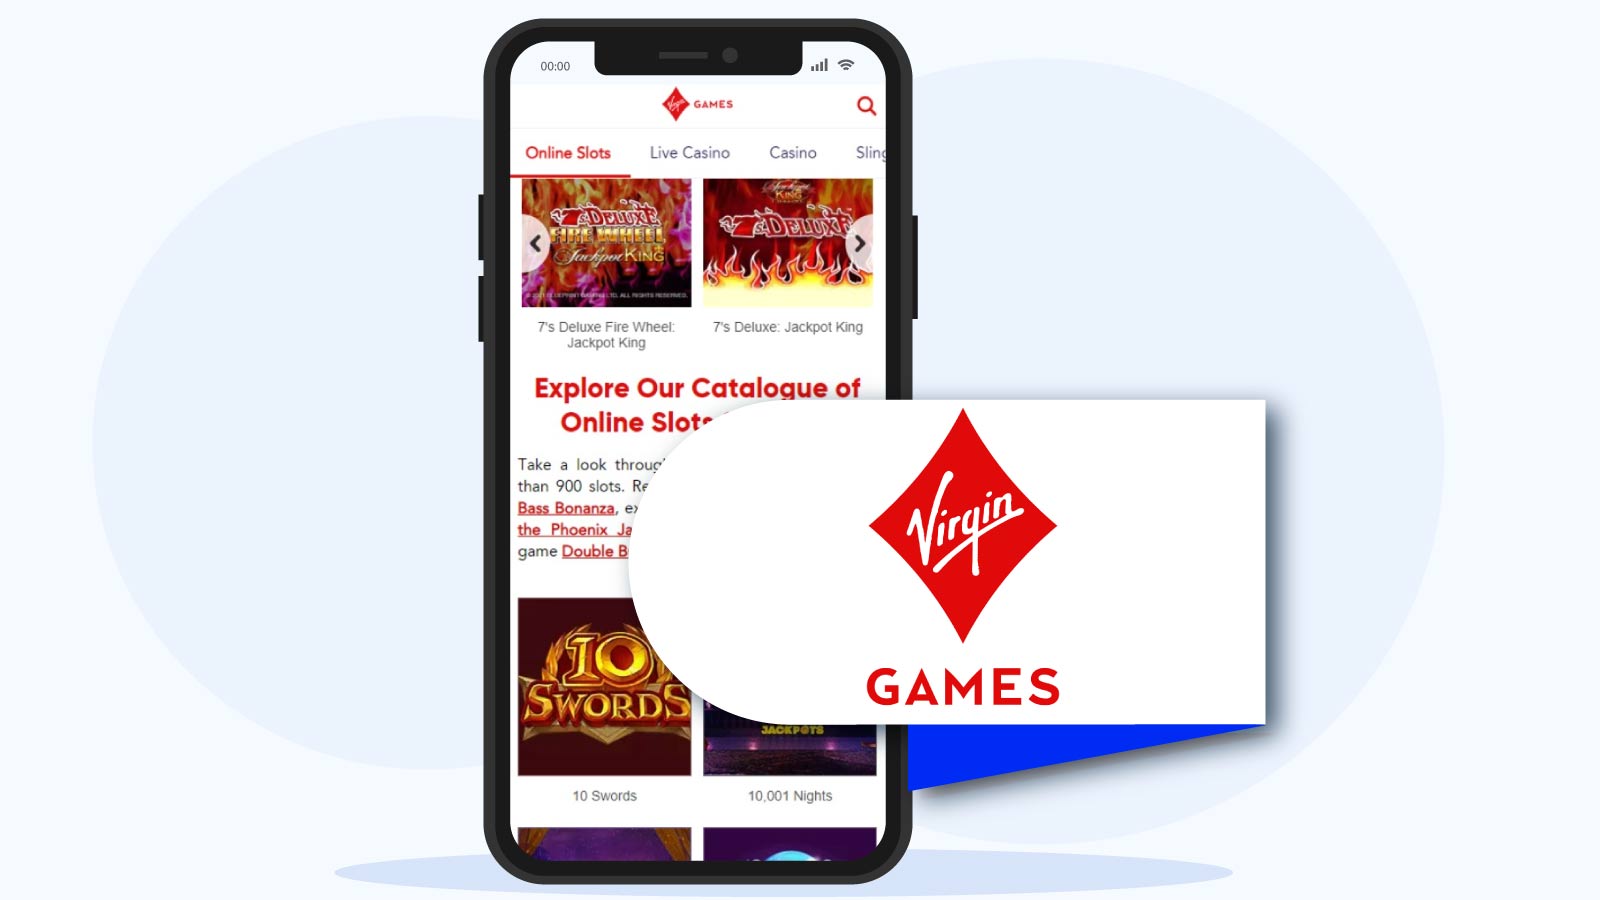 Virgin-Games-Mobile-Casino